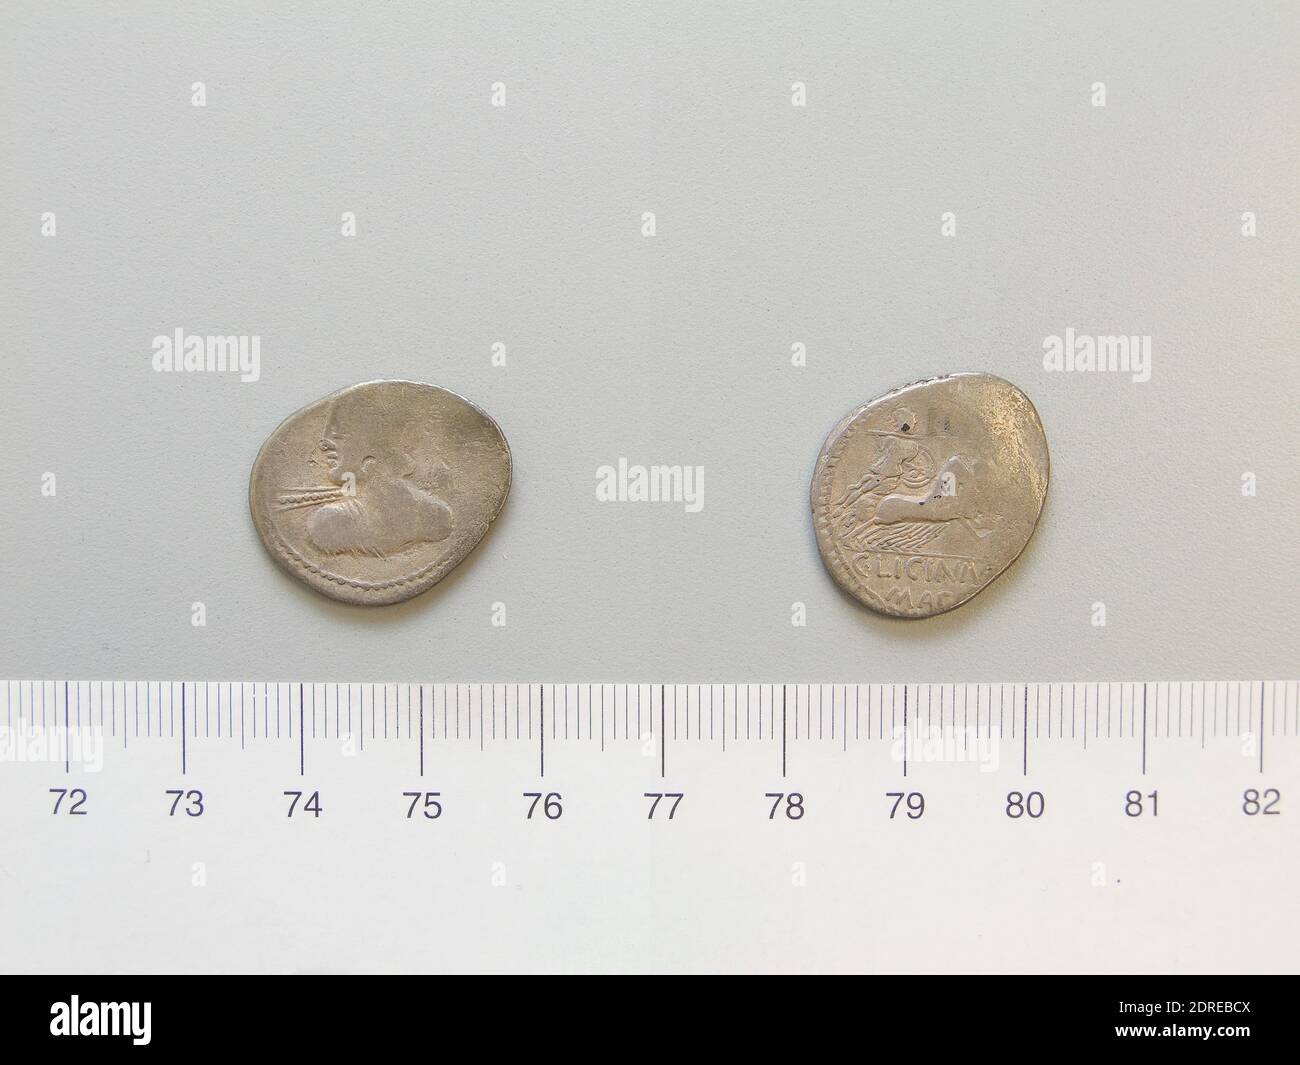 Mint: Rome, Magistrate: C. Licinius L. f. Macer, Denarius from Rome, ca. 84 B.C., Silver, 3.9 g, 8:00, 18.5 mm, Made in Rome, Italy, Roman, 1st century B.C., Numismatics Stock Photo